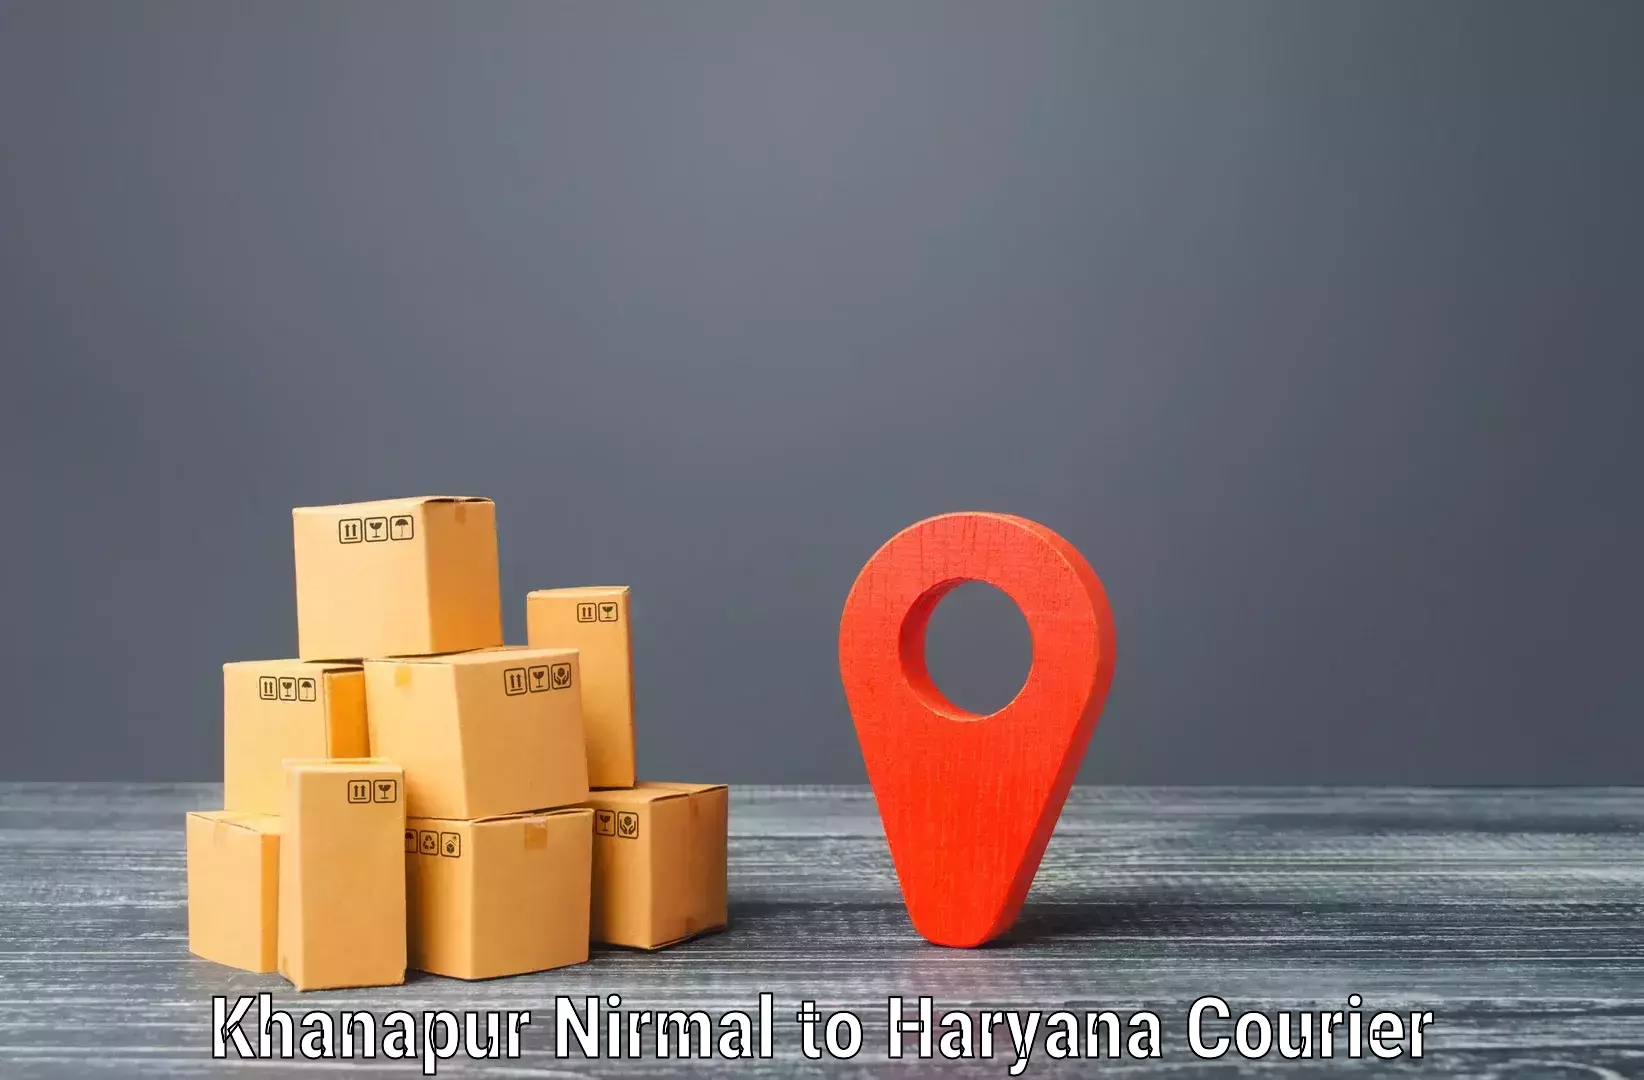 Flexible parcel services in Khanapur Nirmal to NCR Haryana